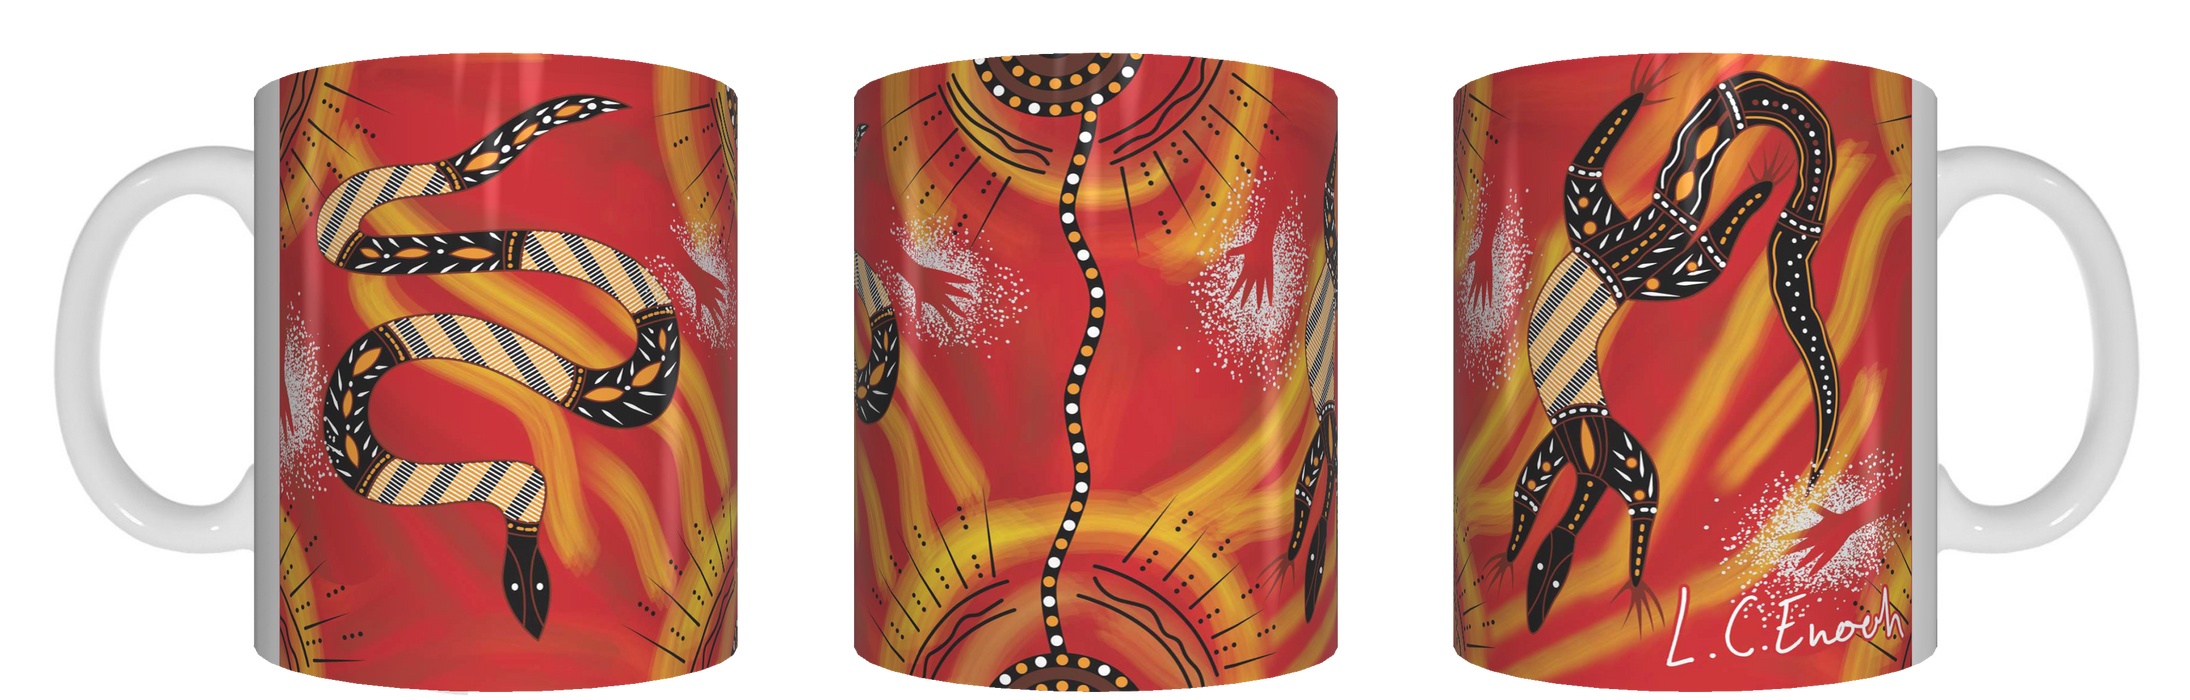 Meeting Place (Fire) - Aboriginal Design Ceramic Mug in Gift Box